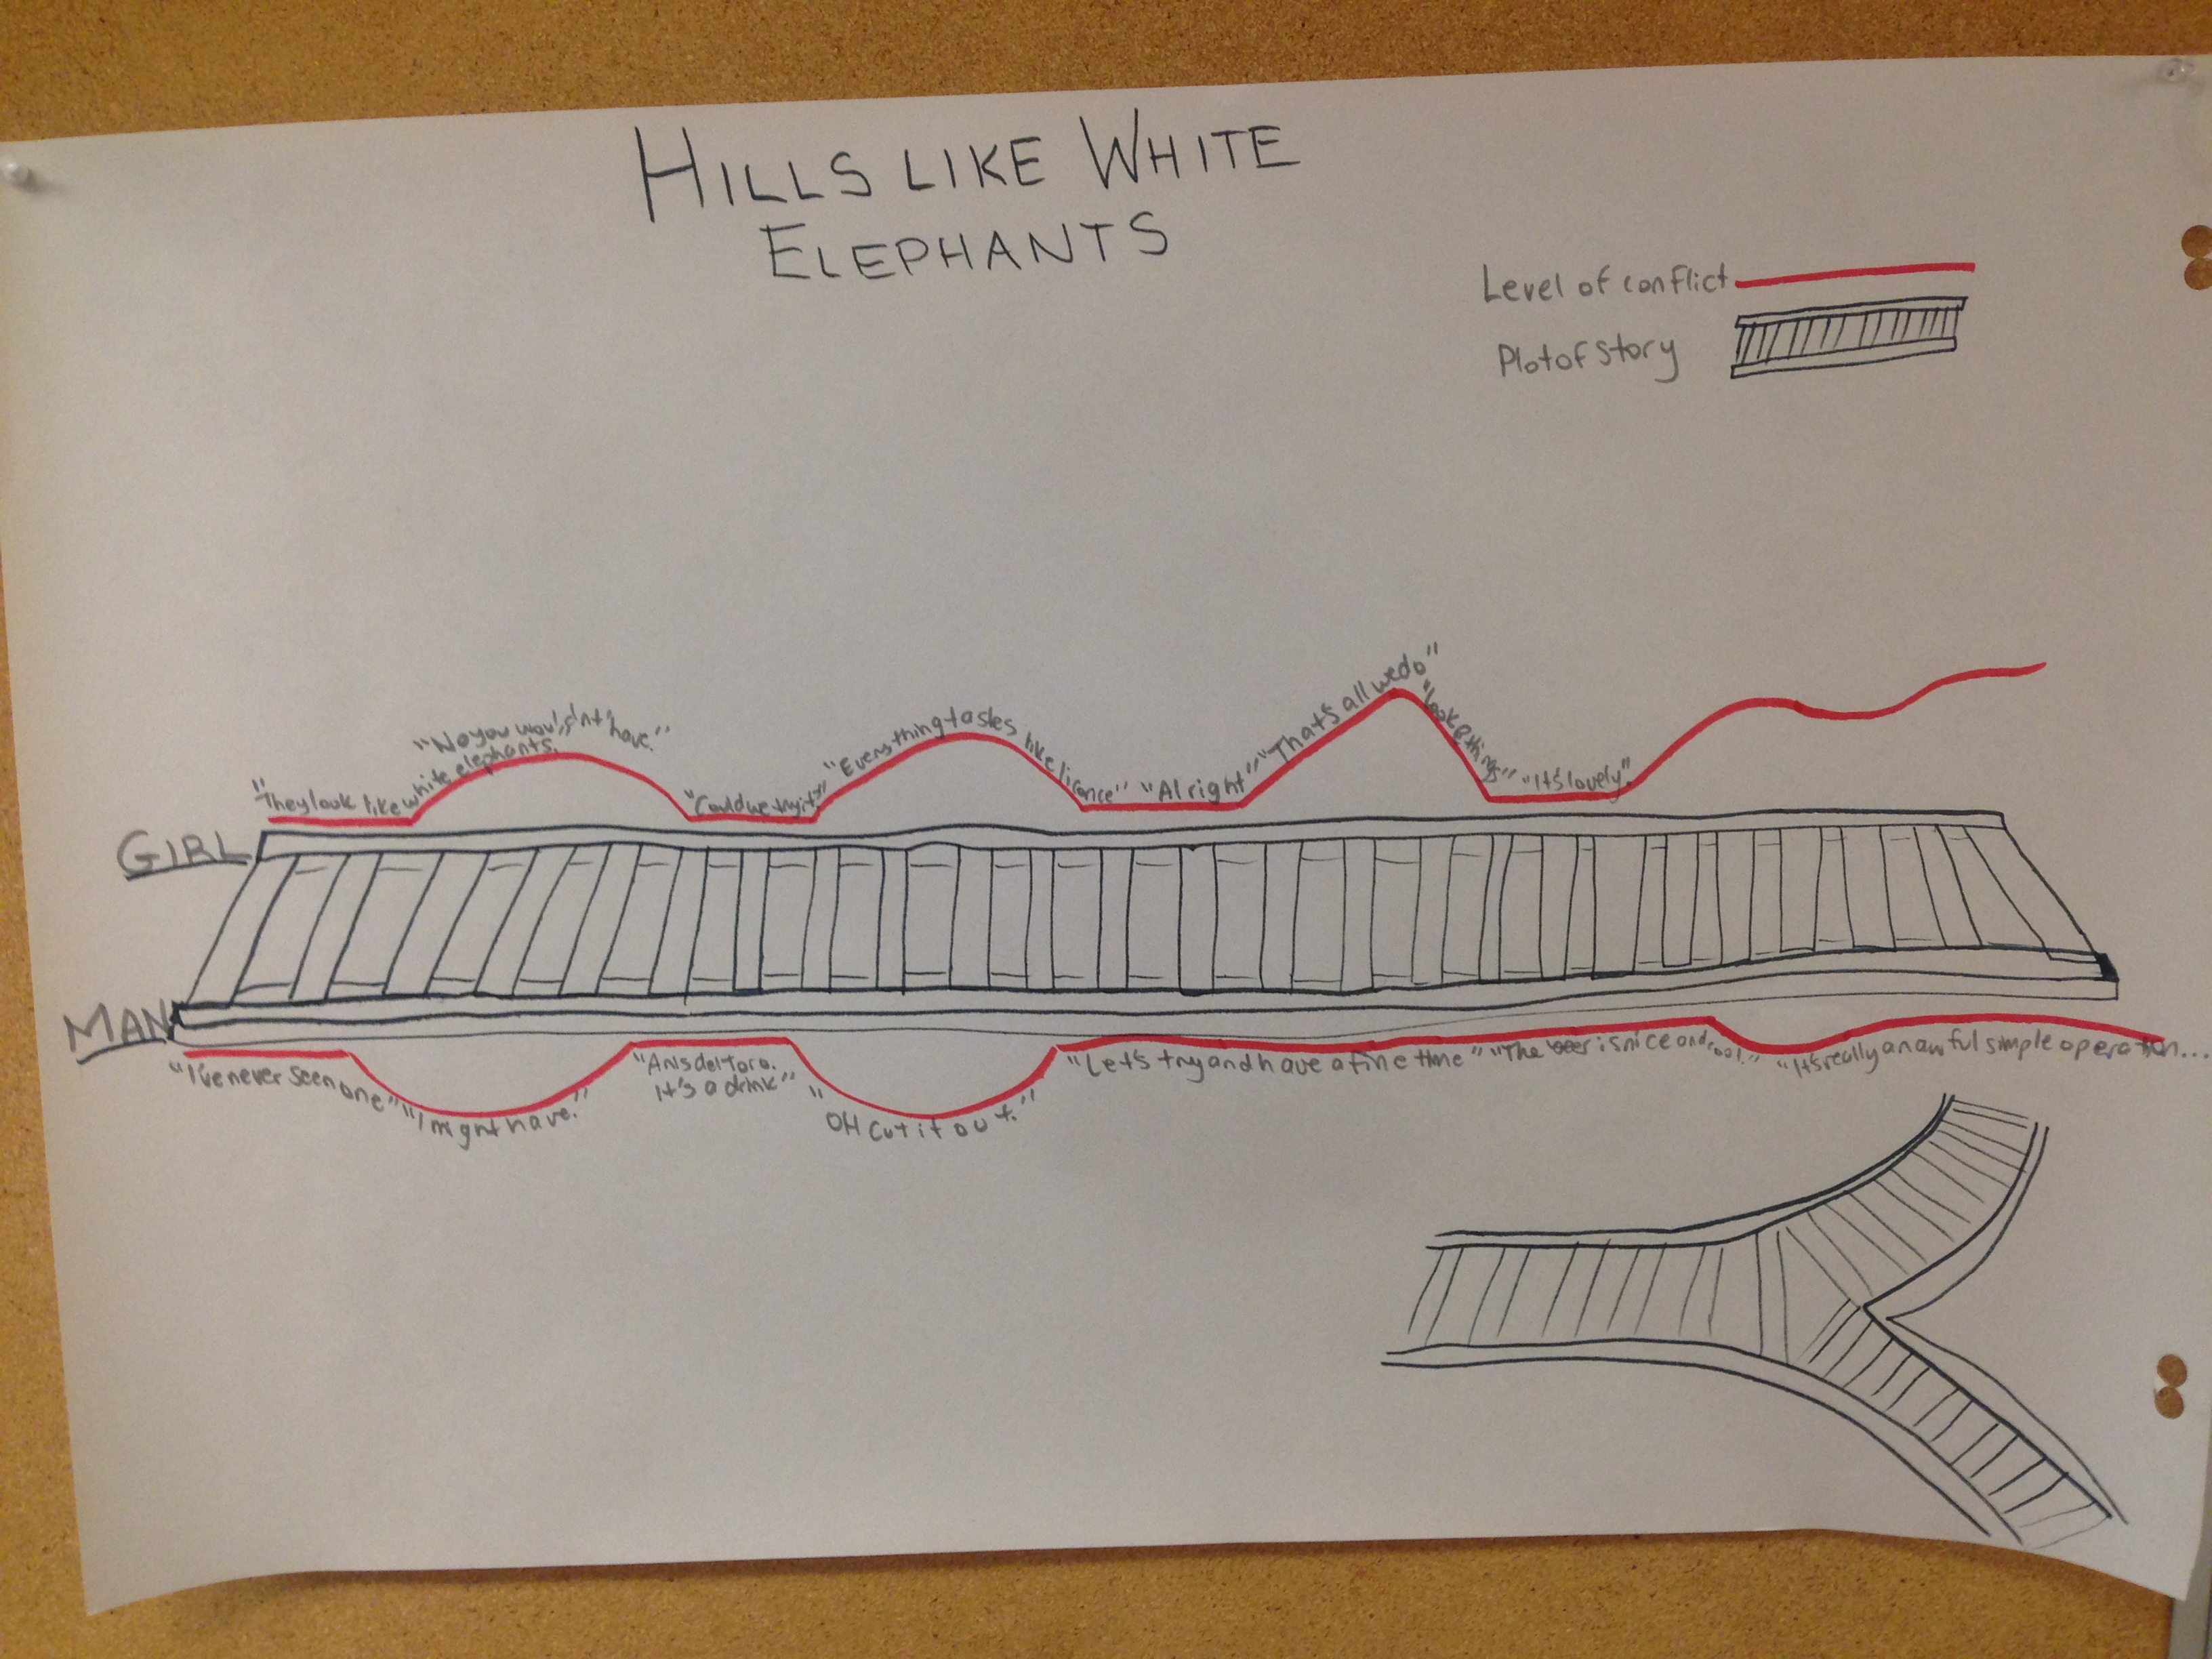 Hills like white elephants analysis essay